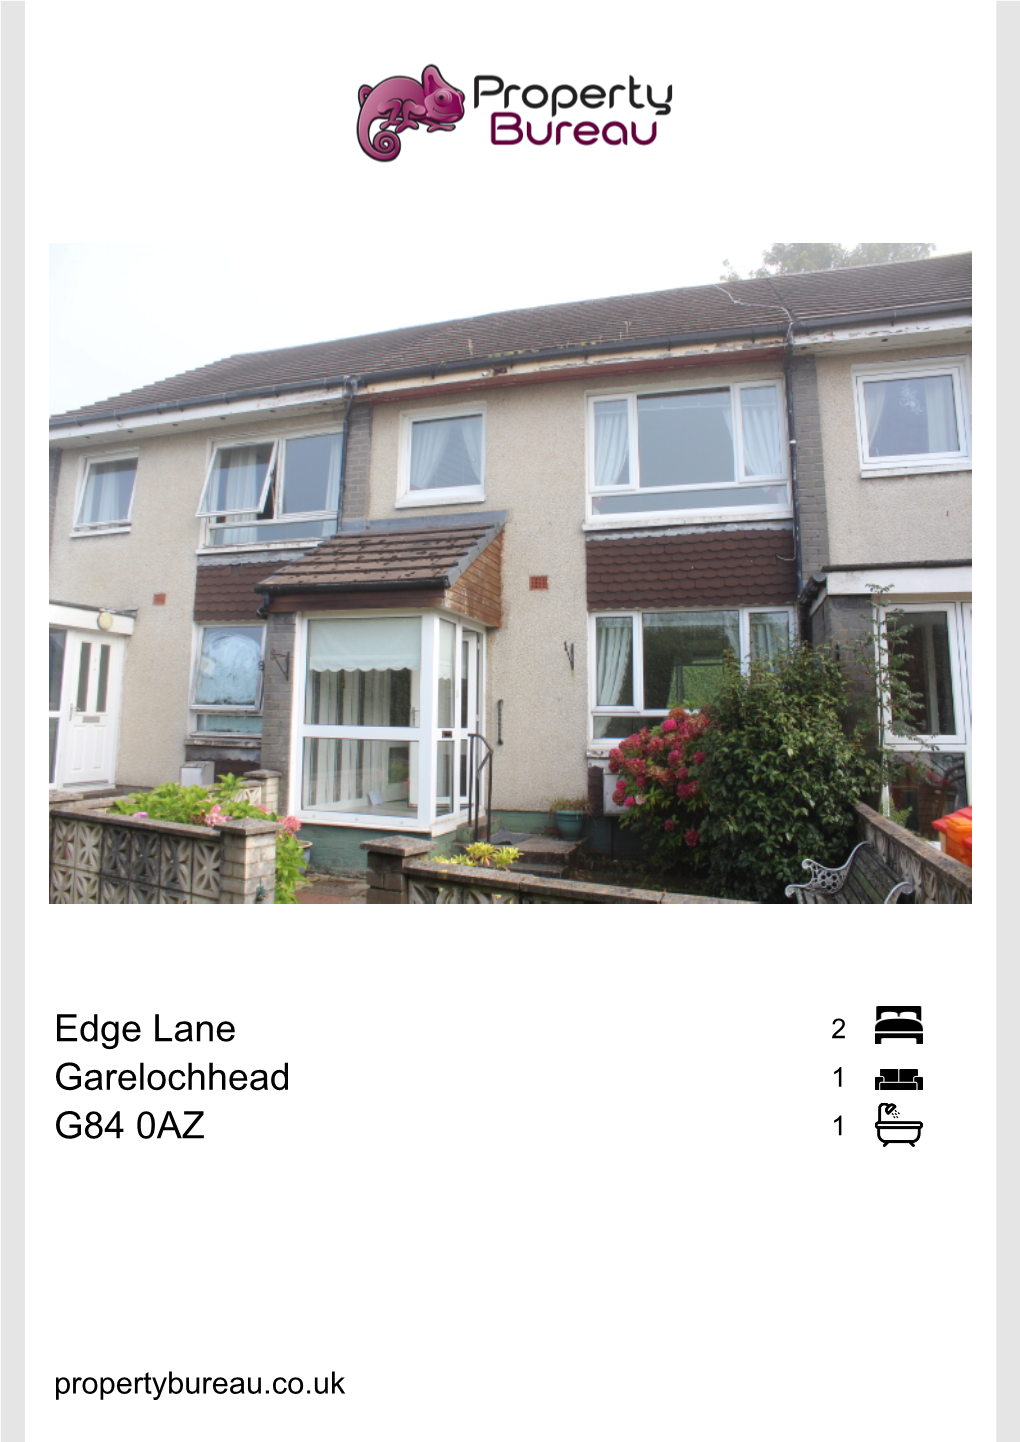 Edge Lane Garelochhead G84